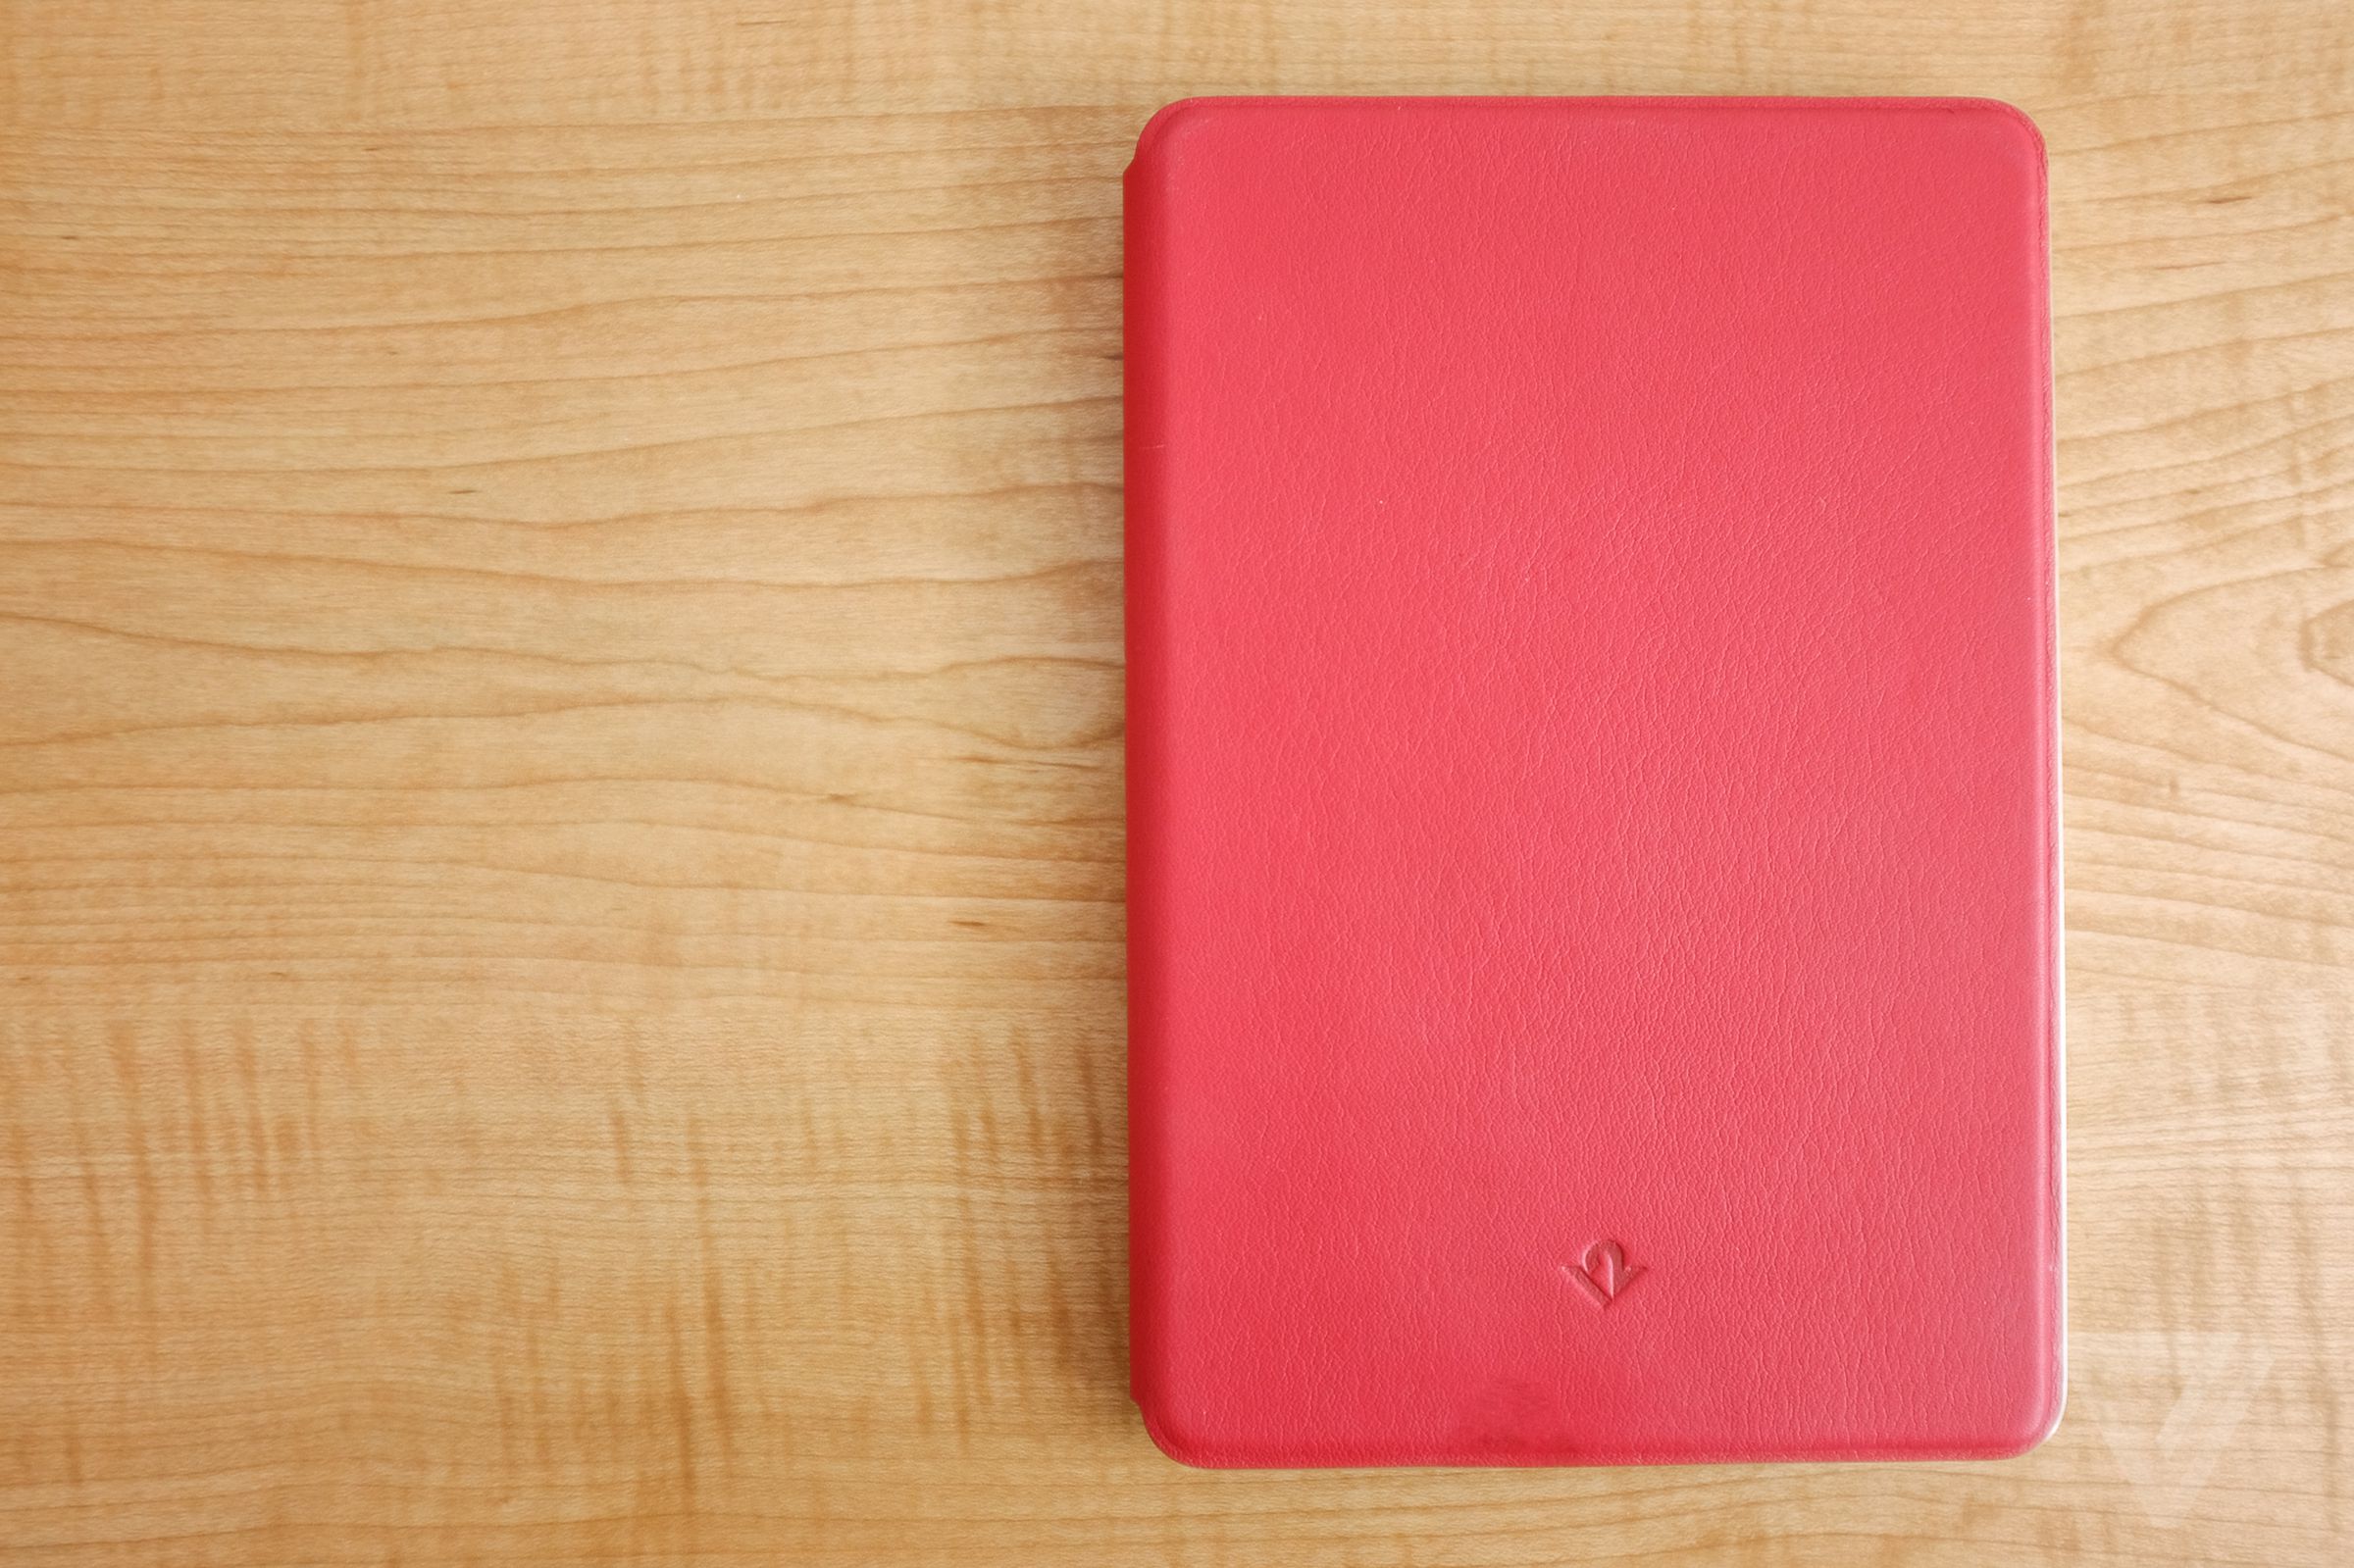 SurfacePad for iPad mini photos